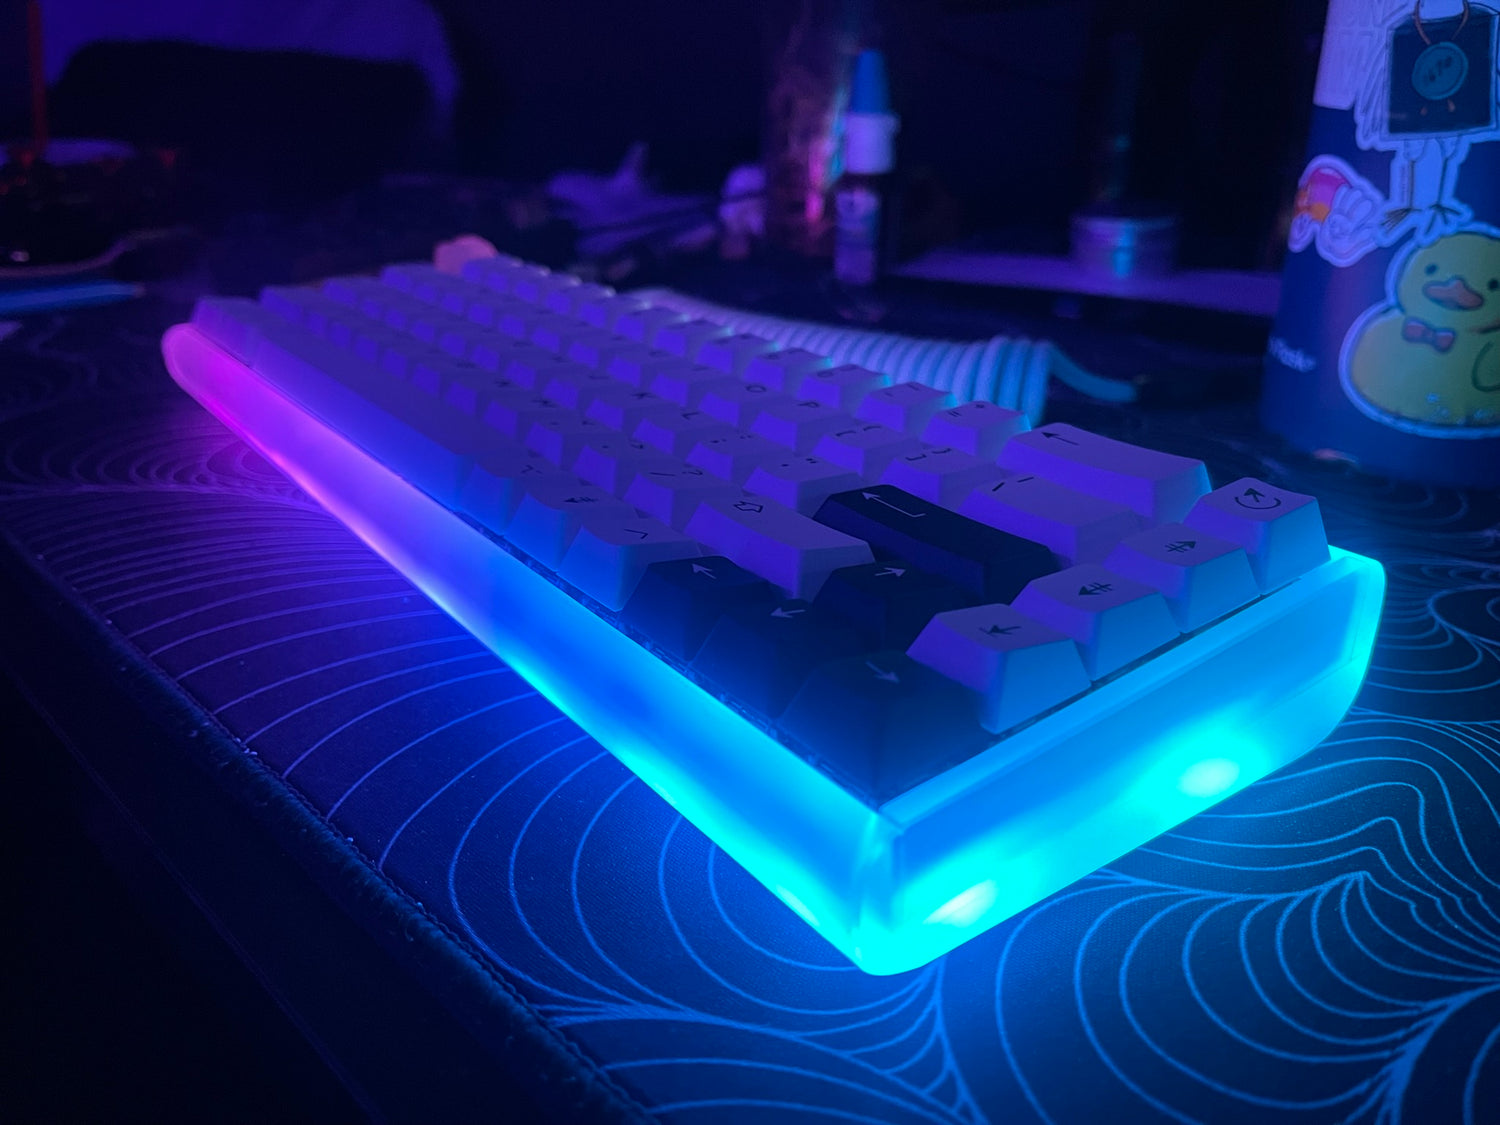 [Extras] Freja65 65% Glass Keyboard Kit